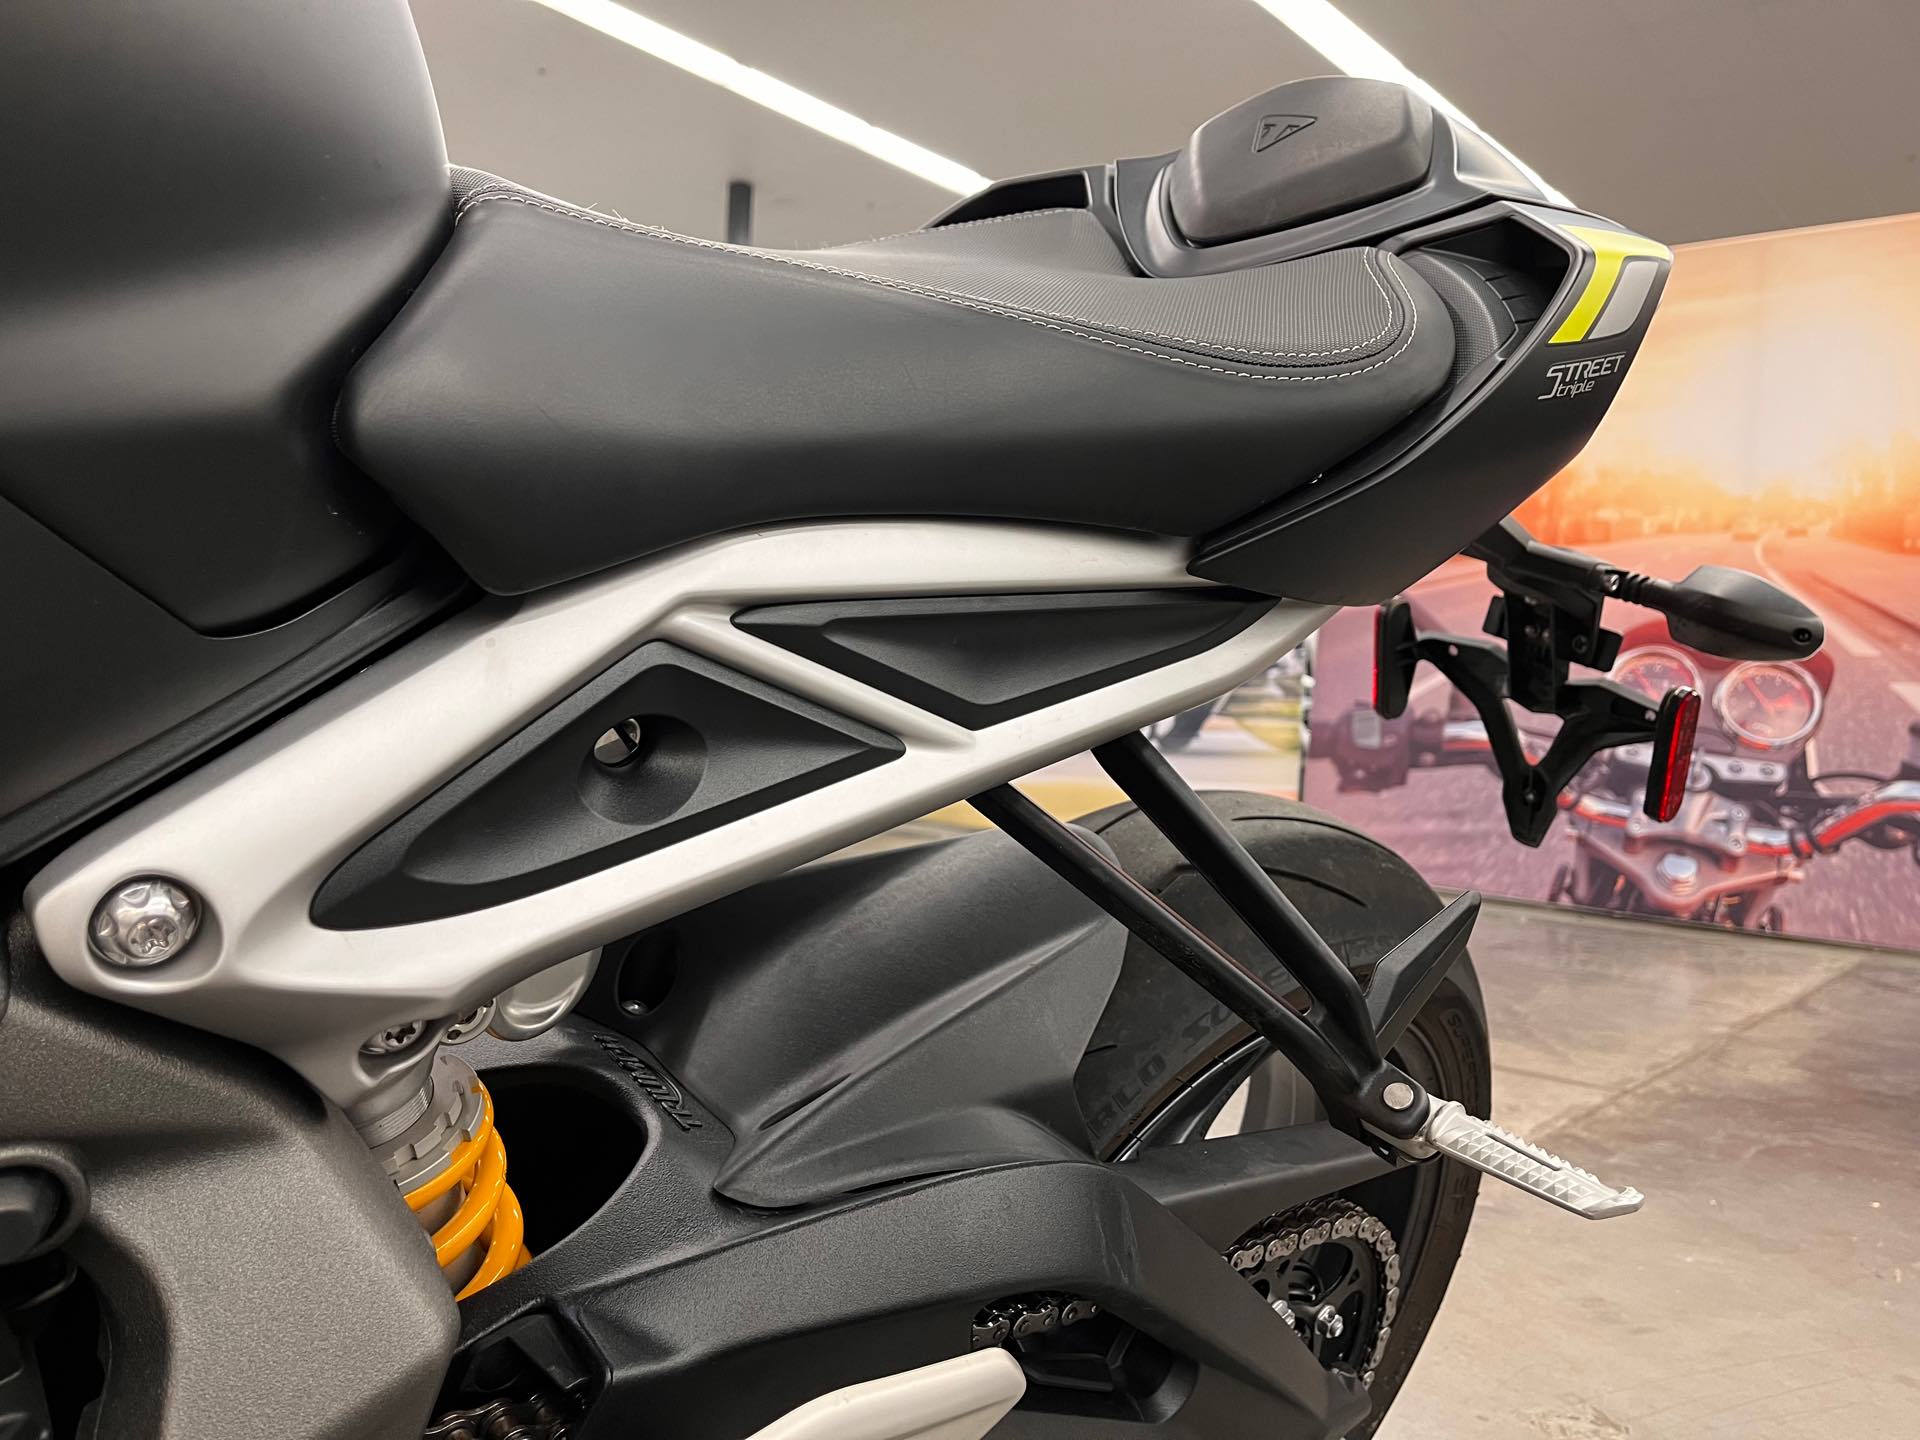 2021 Triumph Street Triple RS at Aces Motorcycles - Denver